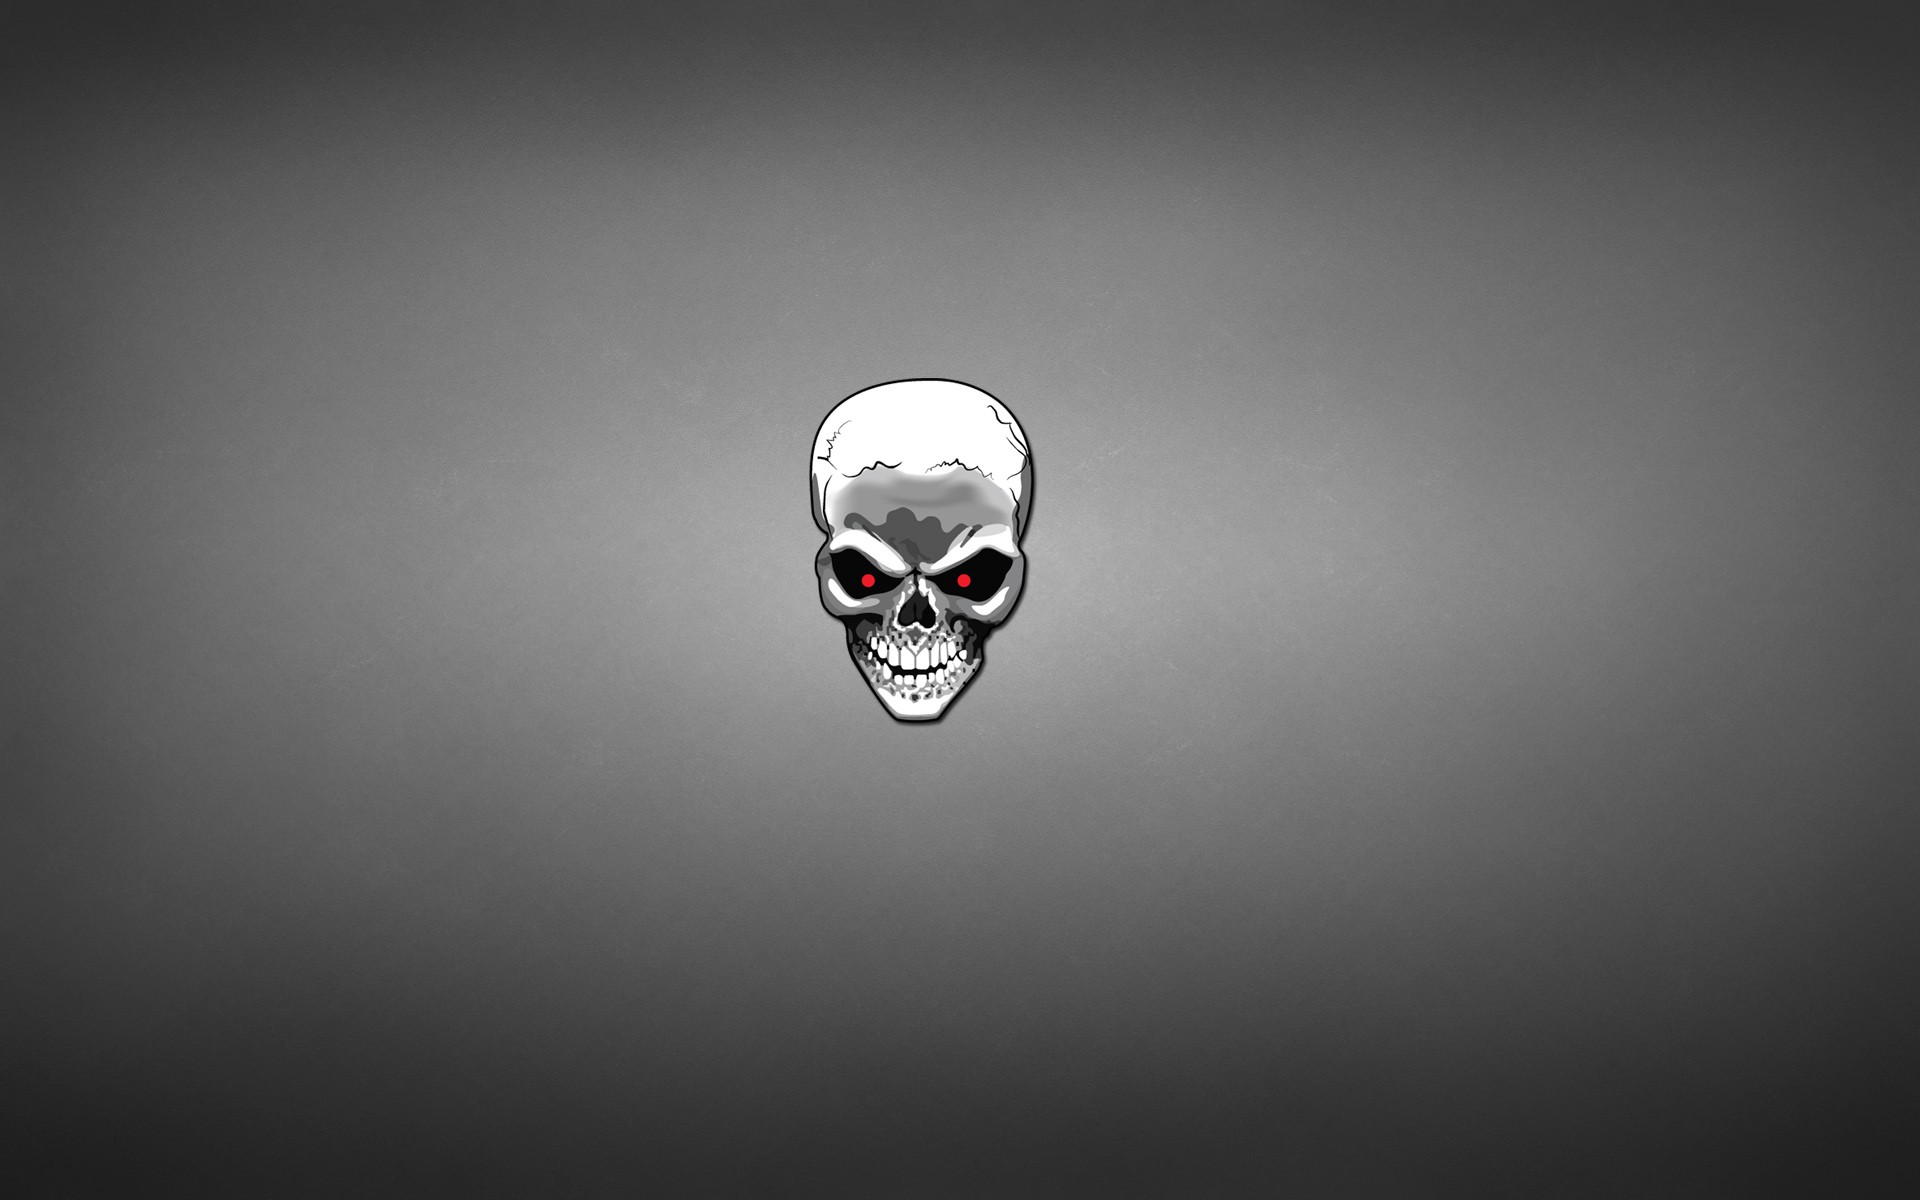 General 1920x1200 artwork minimalism skull Terminator gray gray background simple background gradient